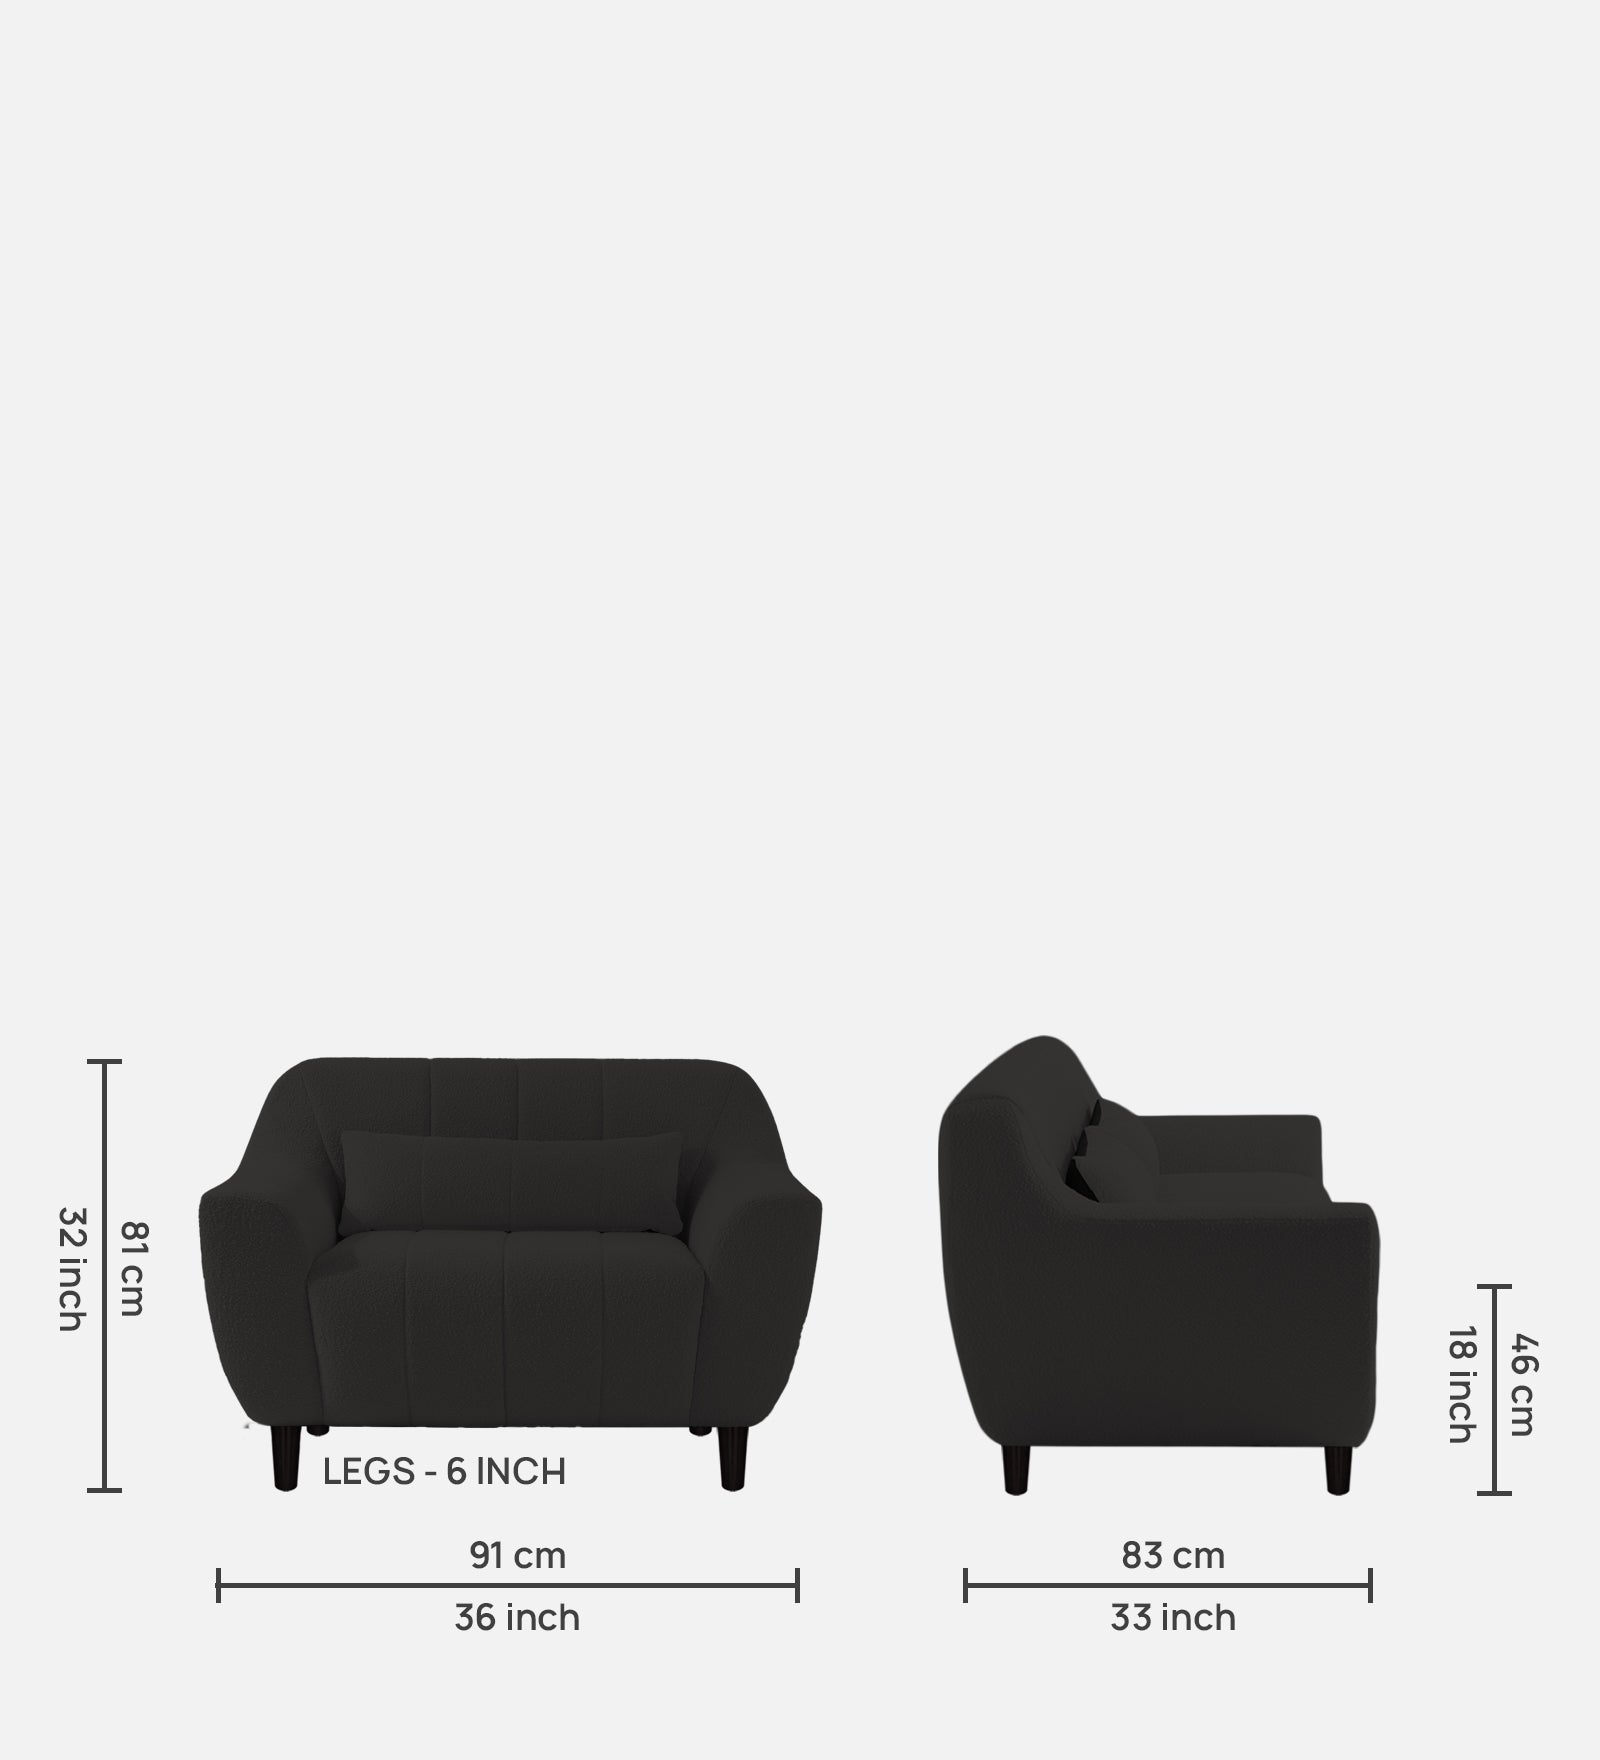 Nesco Fur Fabric 1 Seater Sofa in Cloud Grey Colour